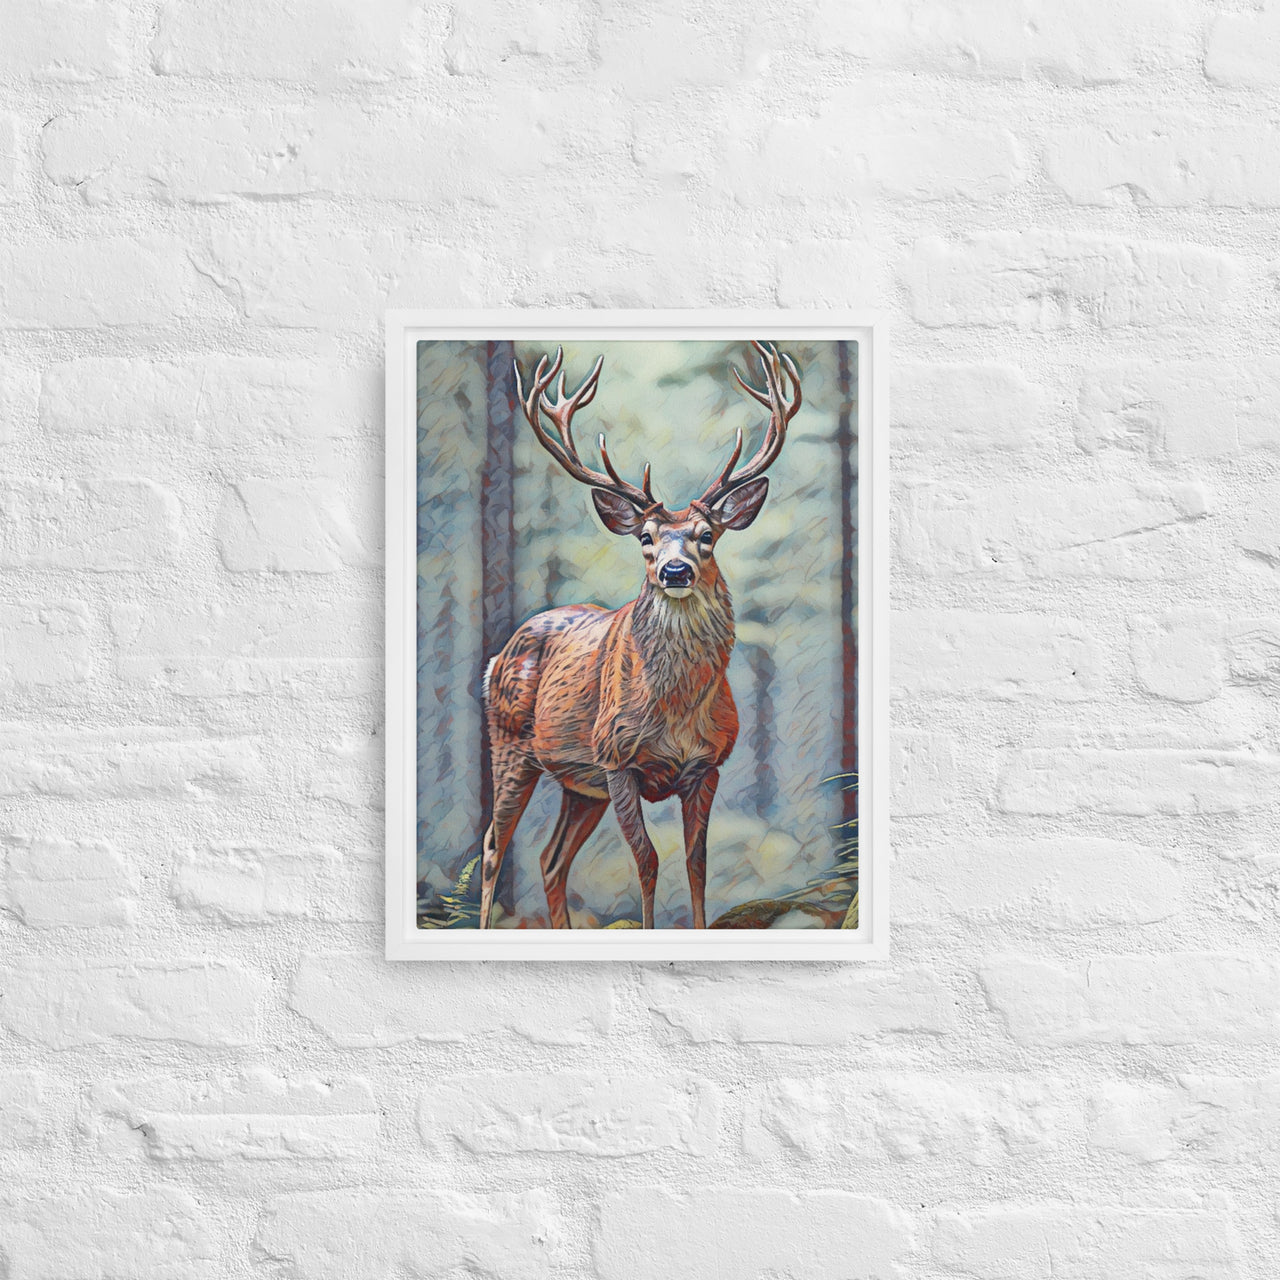 Oregon Deer - Digital Art - Framed canvas - FREE SHIPPING